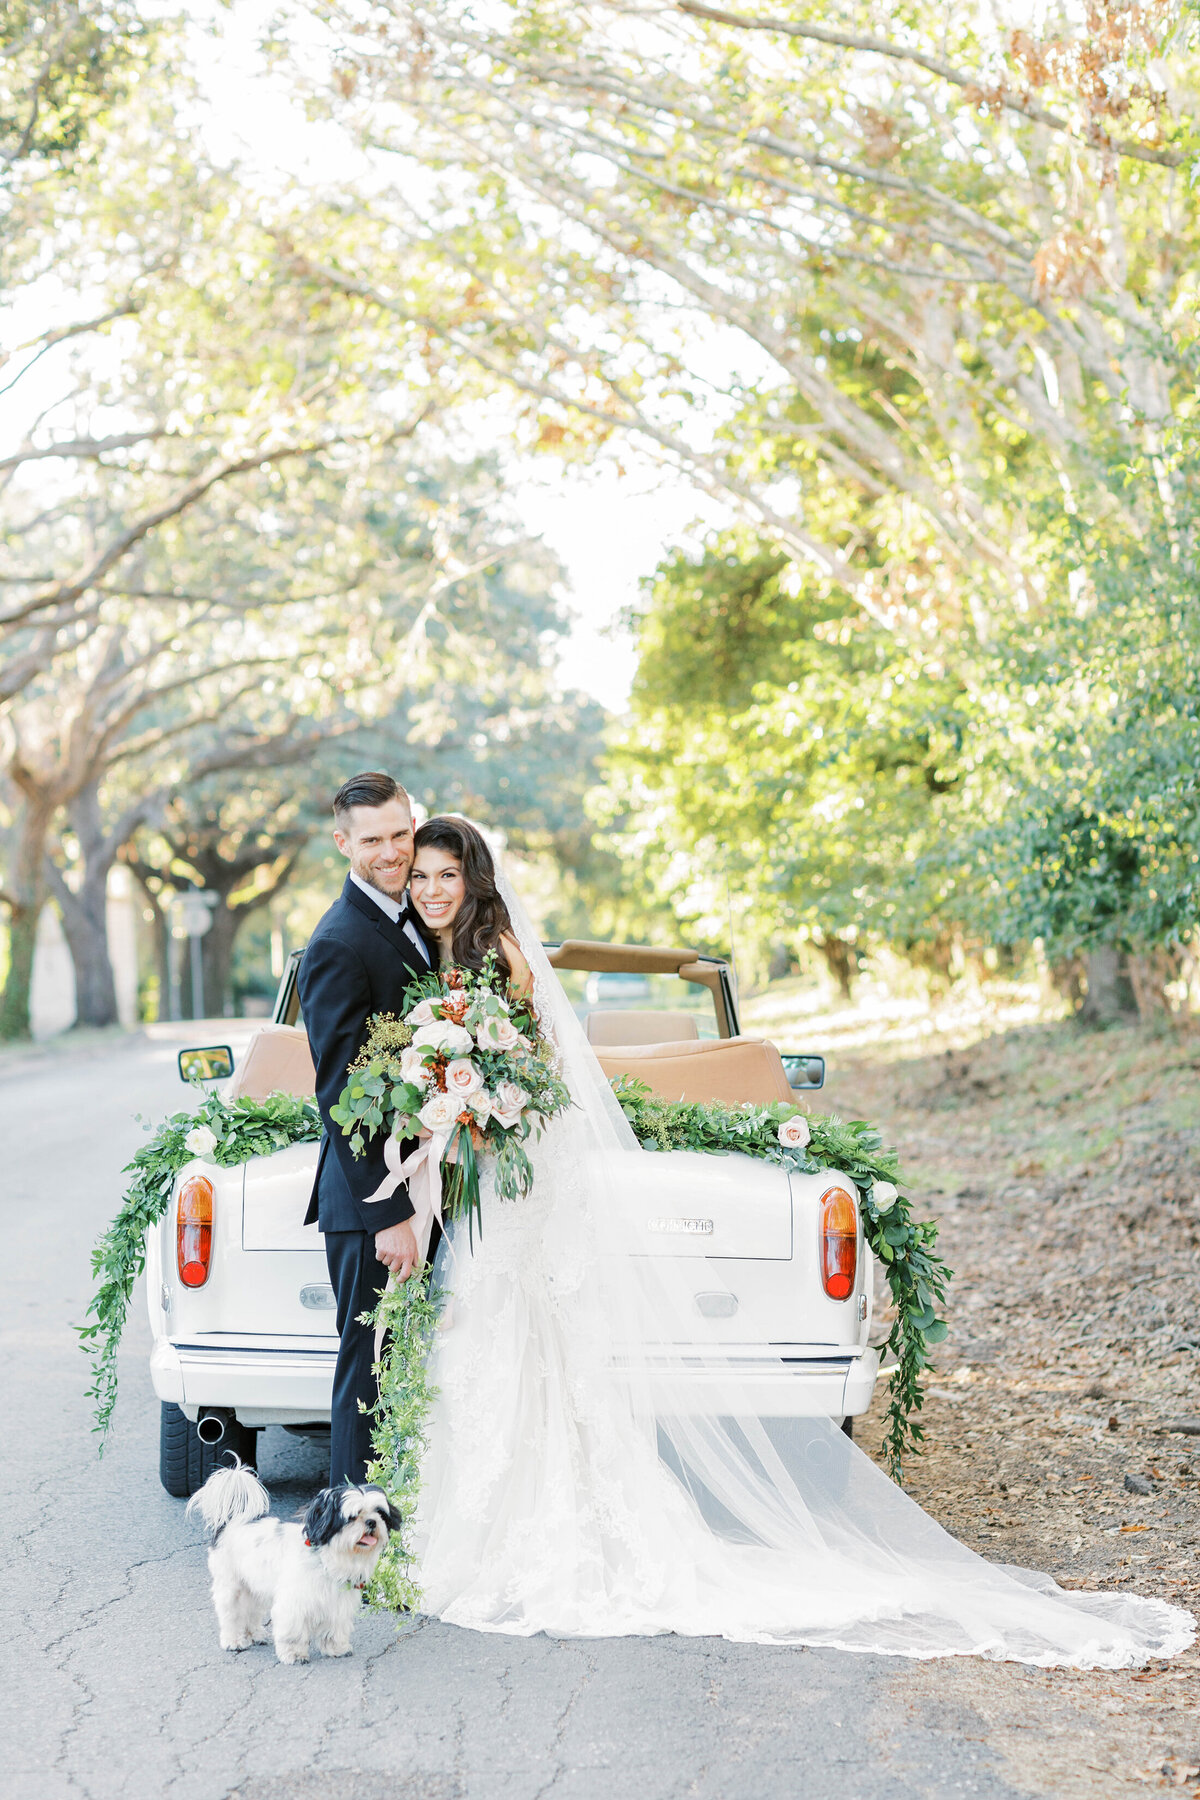 South Texas Wedding Photography | Jenny King Photography | Serving Victoria, Austin, San Antonio, Houston, Destinations